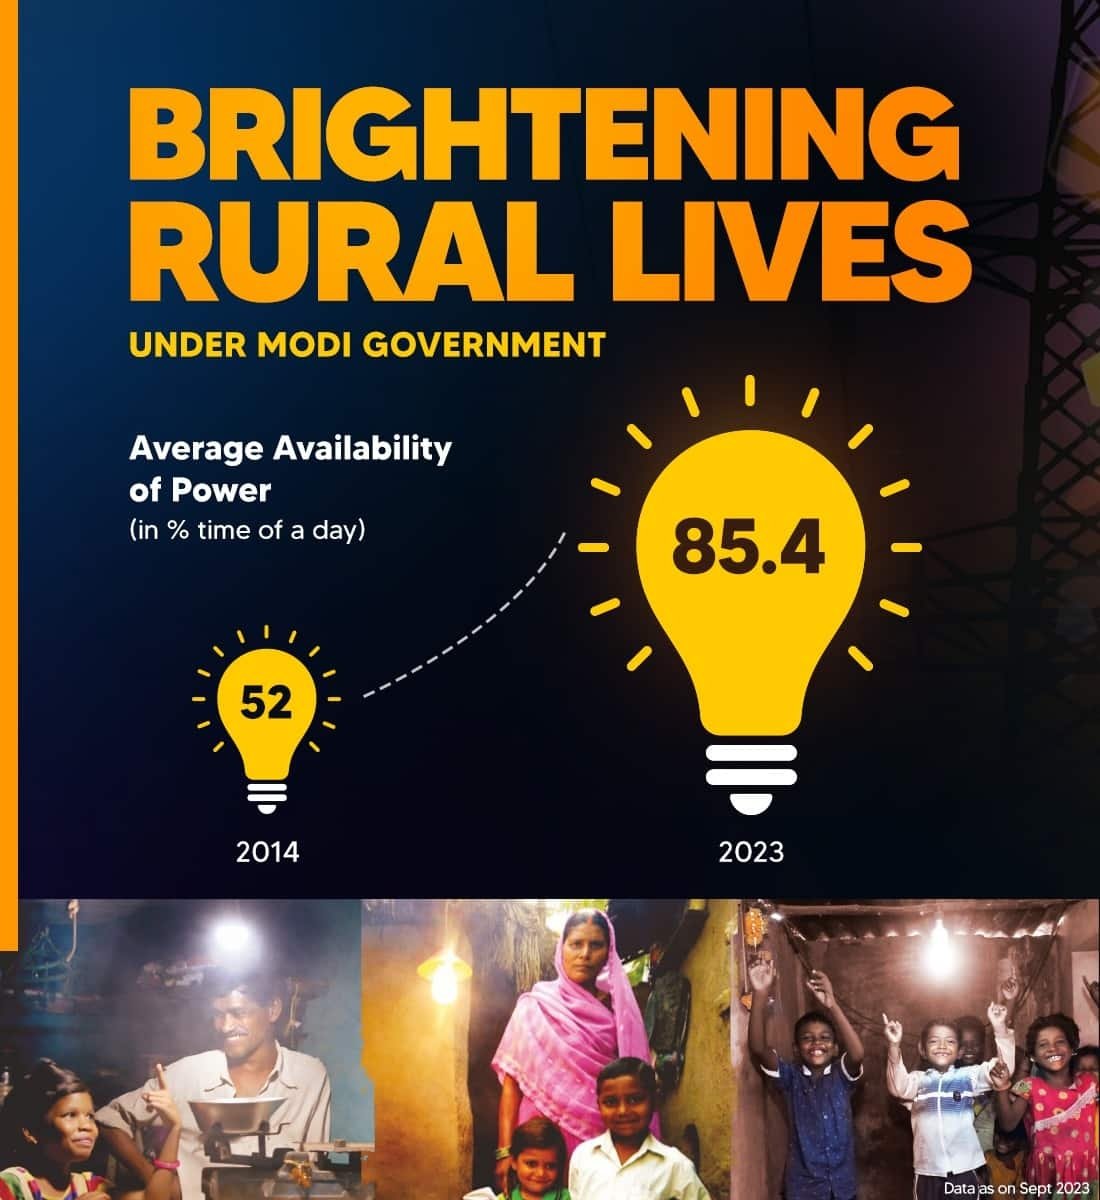 Brightening Rural Lives under Modi Government